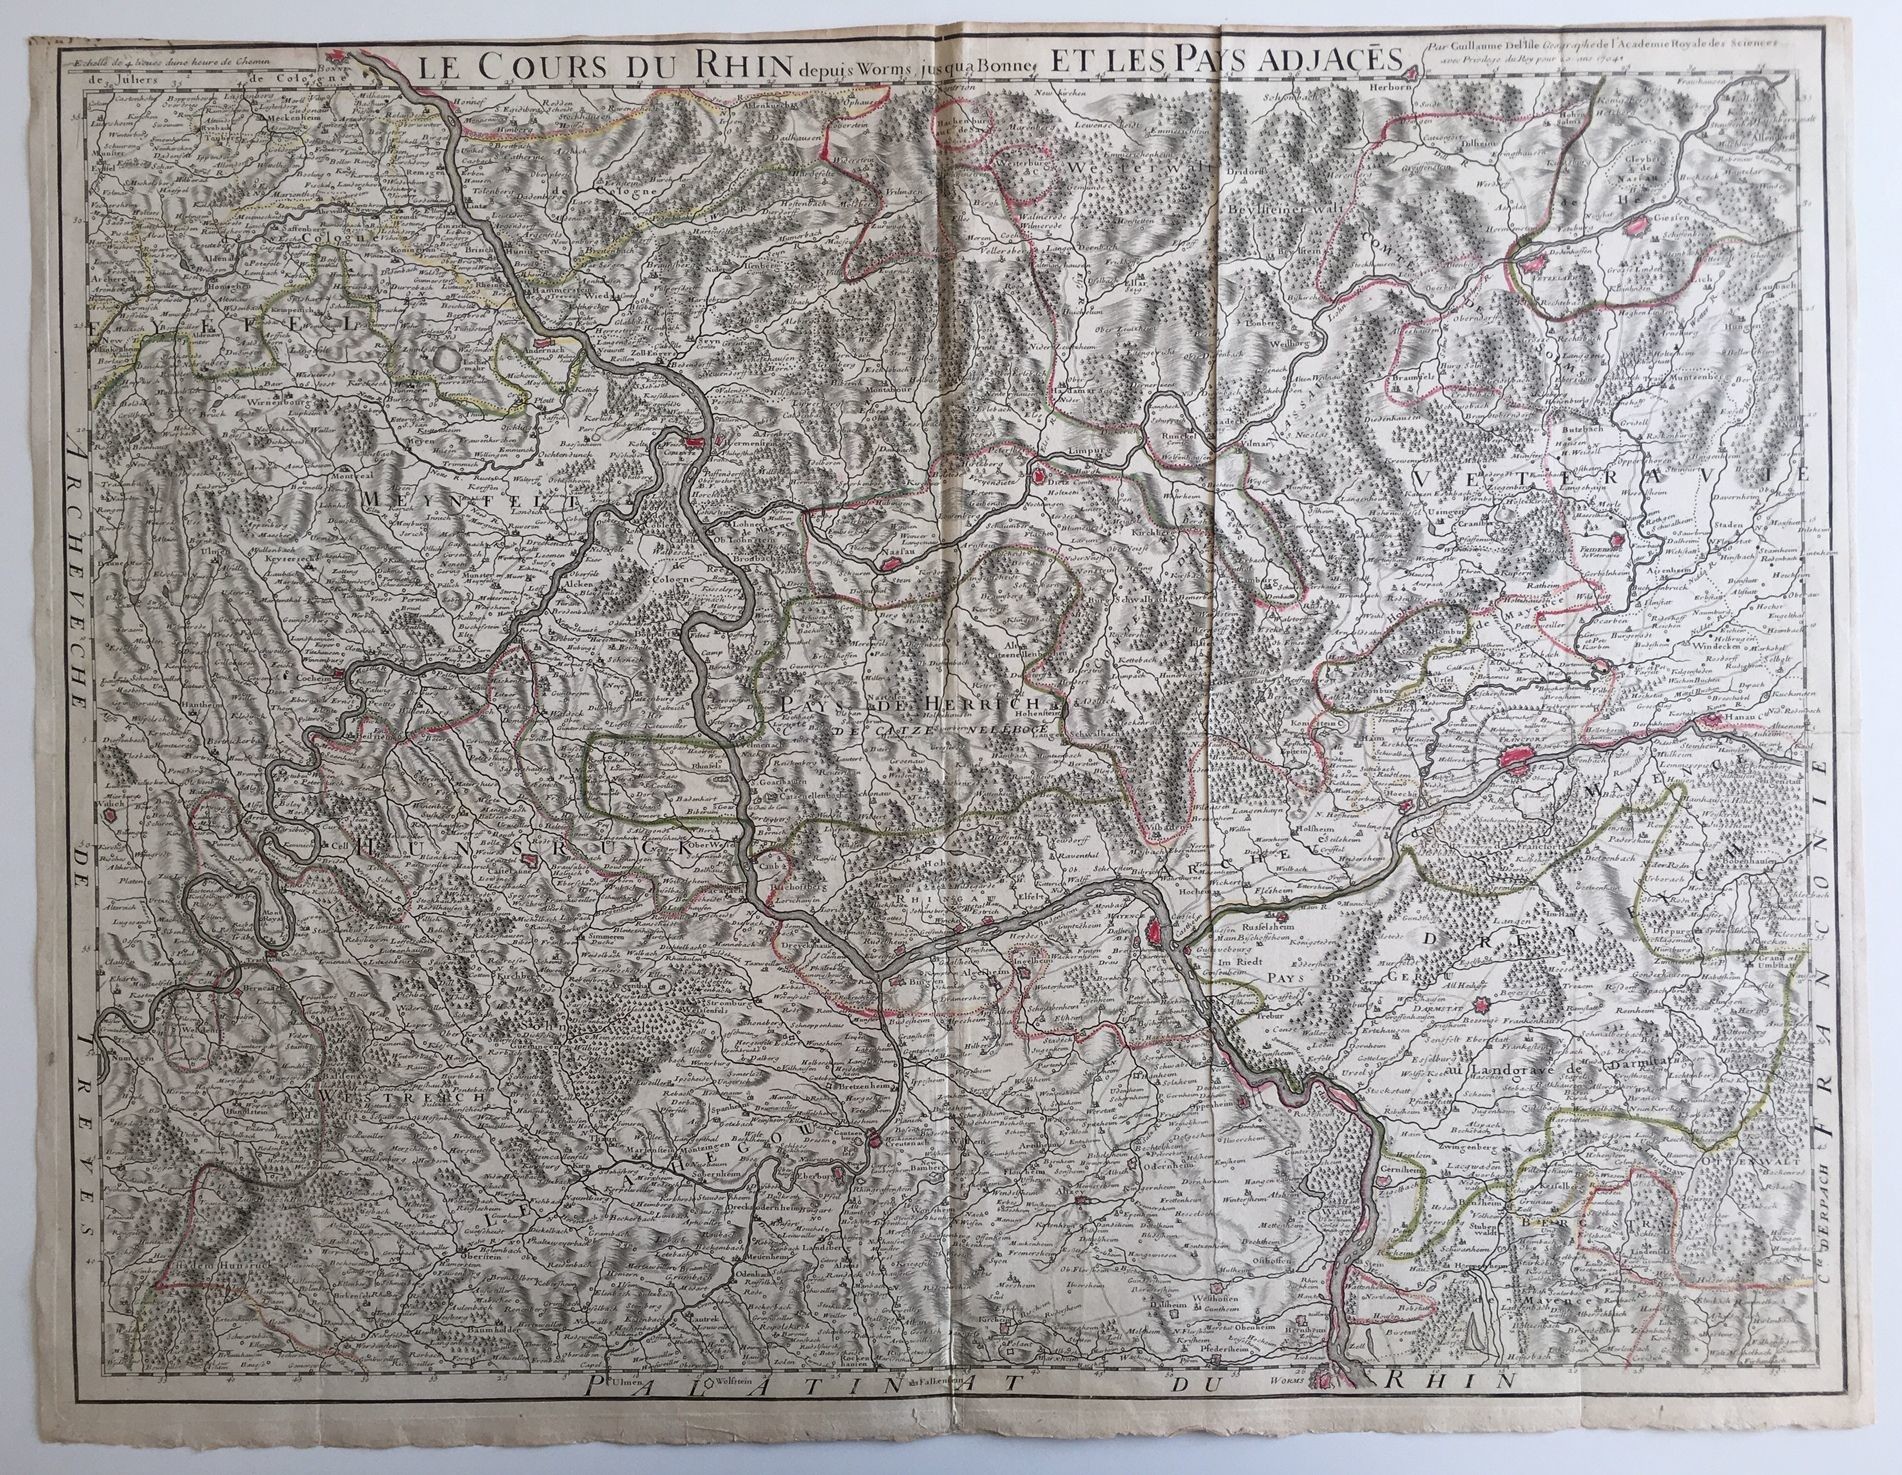 Guillaume de L'Isle, Le Cours du Rhin dépuis Worms jusqu' a Bonne et les Pays adiacens, nach 1730. (Taunus-Rhein-Main - Regionalgeschichtliche Sammlung Dr. Stefan Naas CC BY-NC-SA)